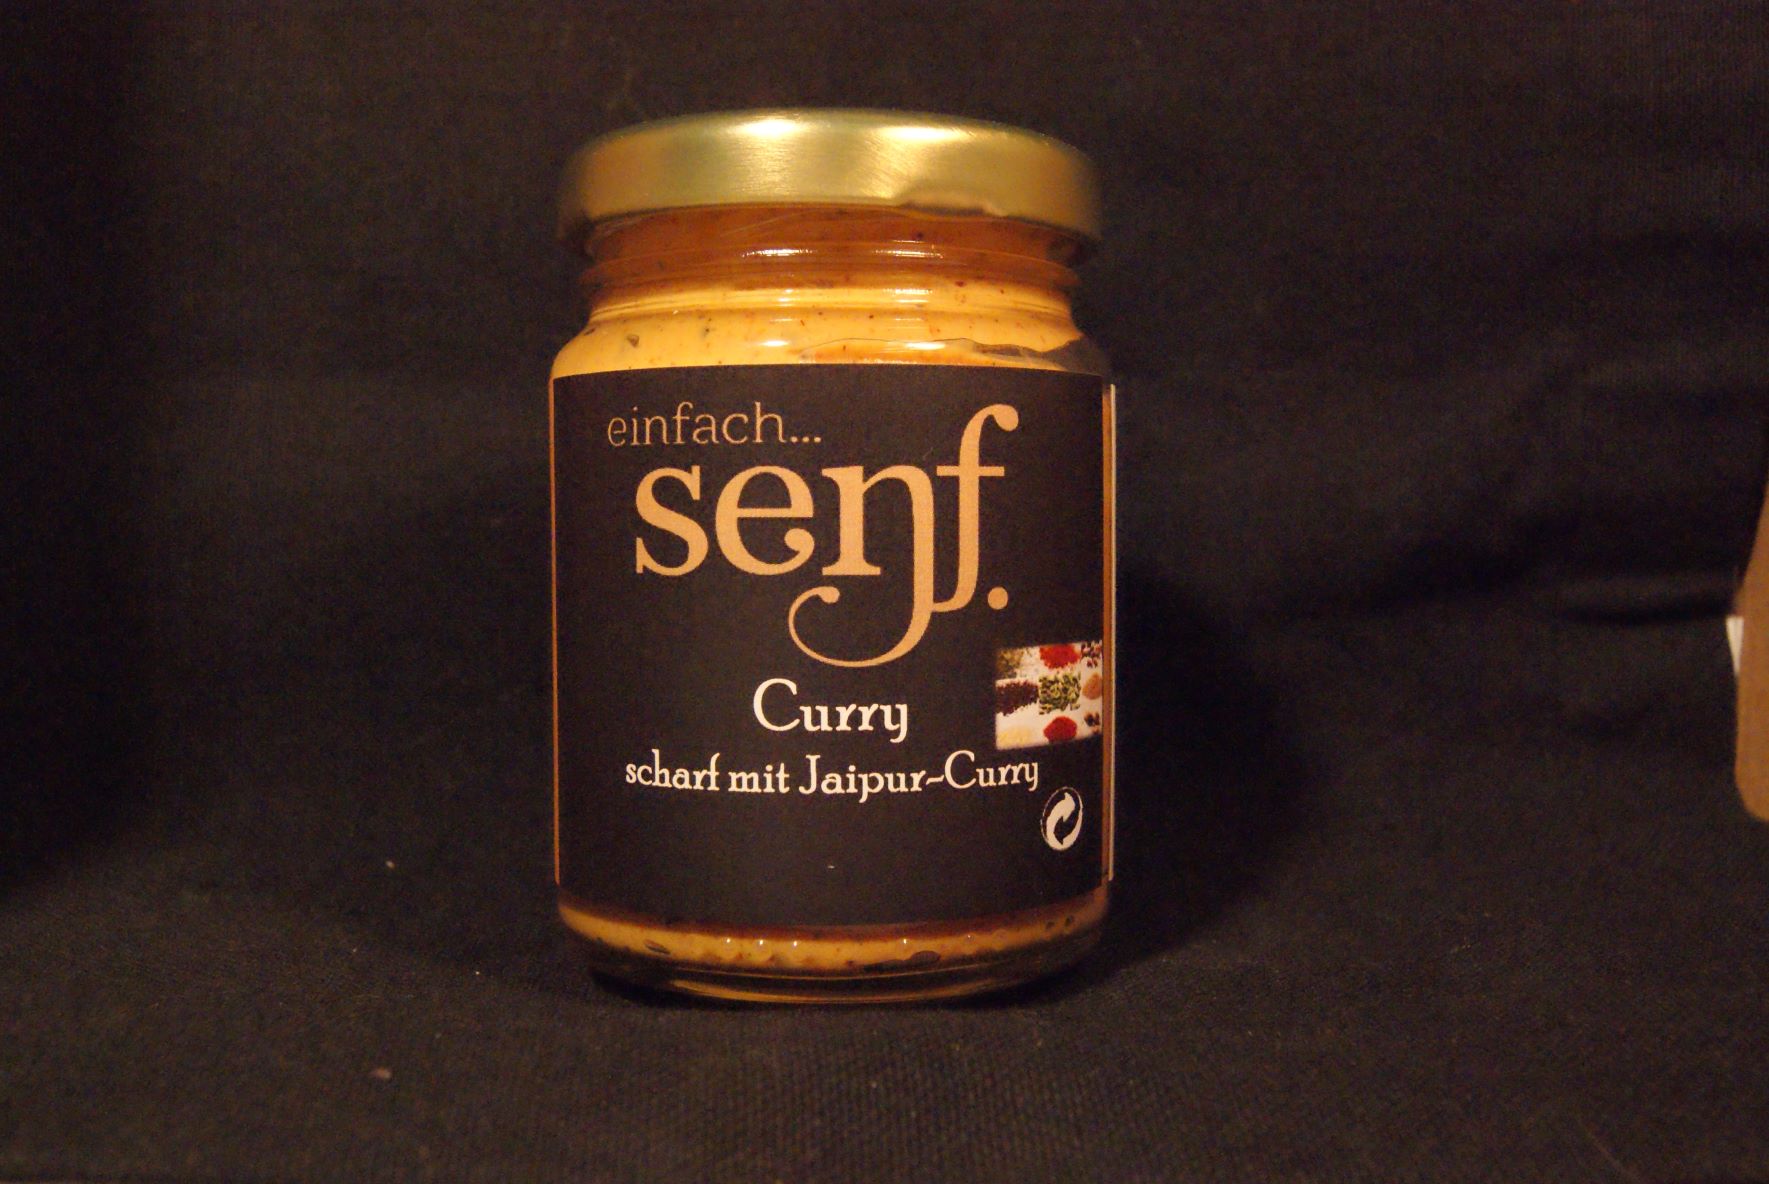 Curry-Senf scharf, Jaipur